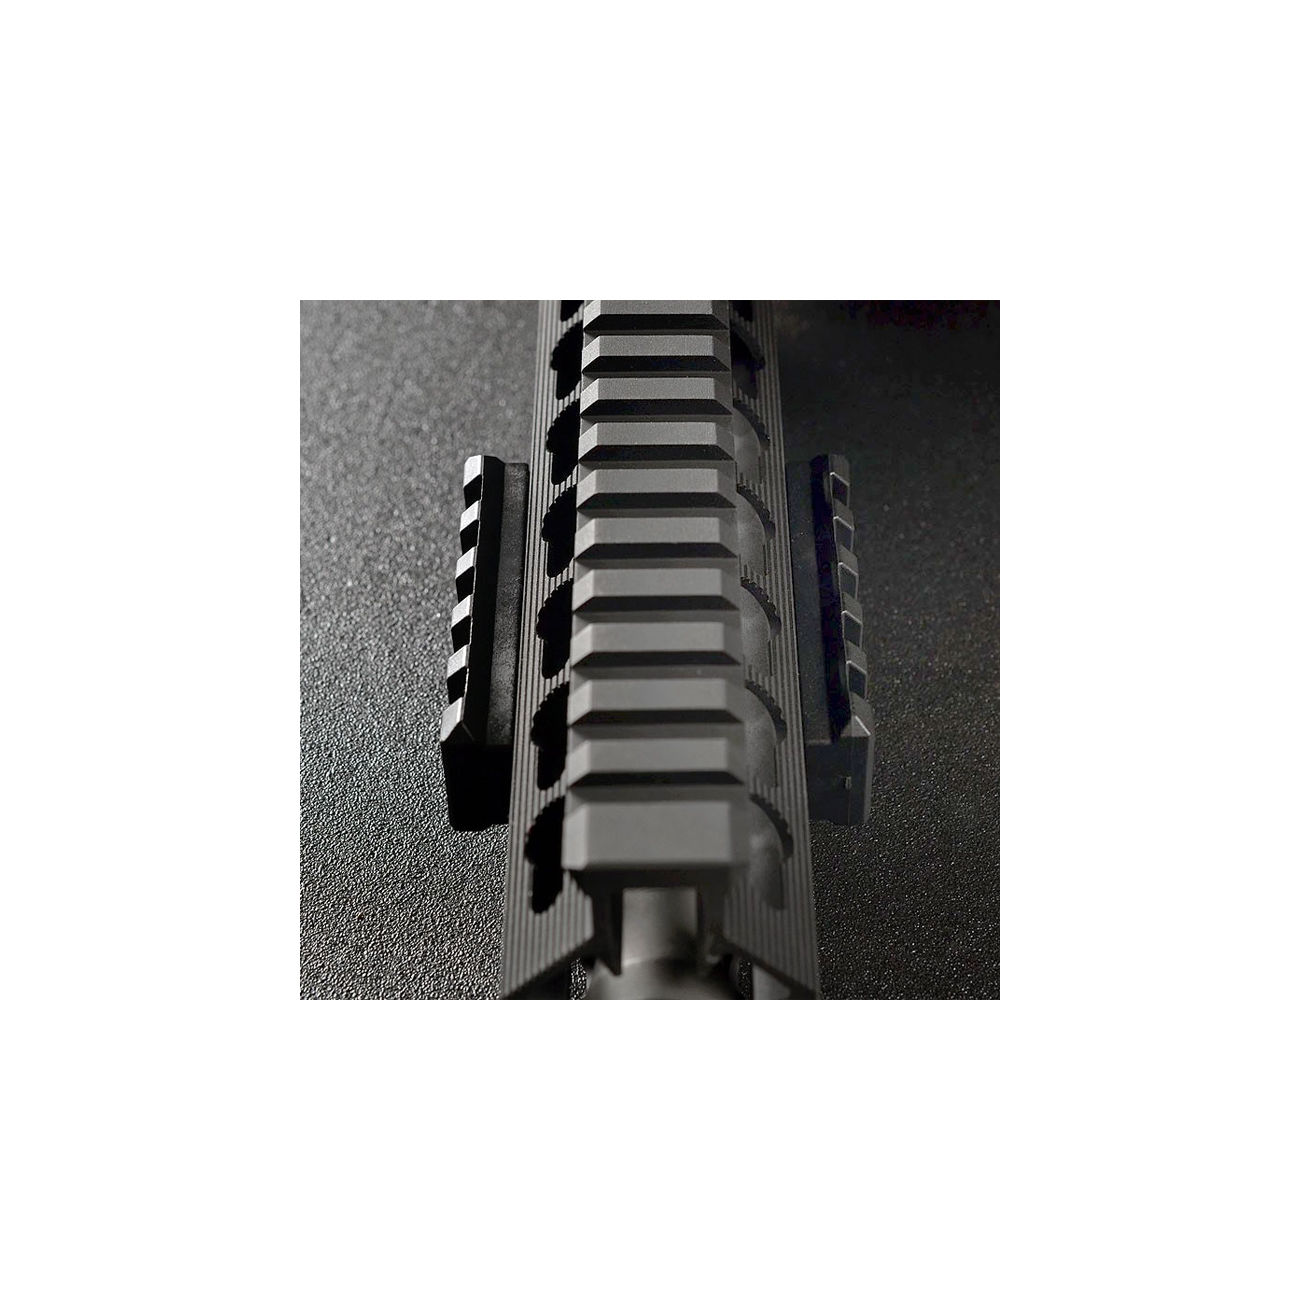 MadBull / Strike Industries KeyMod 21mm Polymer Schiene 5 Slots / 59mm (2) schwarz Bild 3